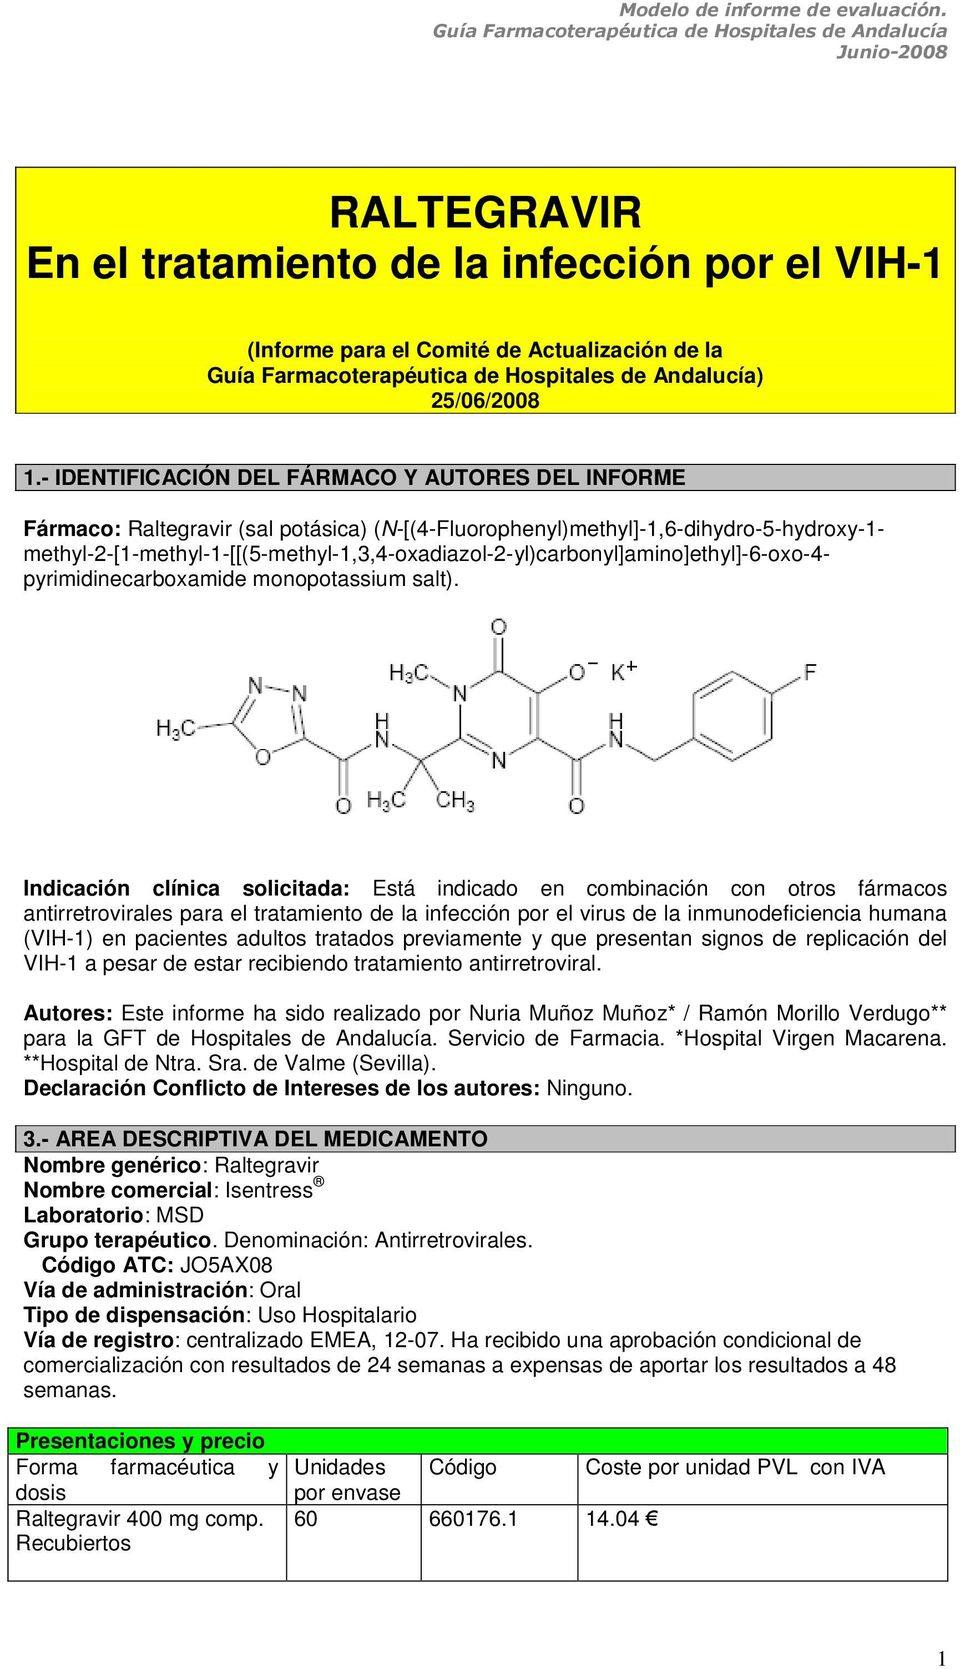 methyl-2-[-methyl--[[(5-methyl-,3,4-oxadiazol-2-yl)carbonyl]amino]ethyl]-6-oxo-4- pyrimidinecarboxamide monopotassium salt).